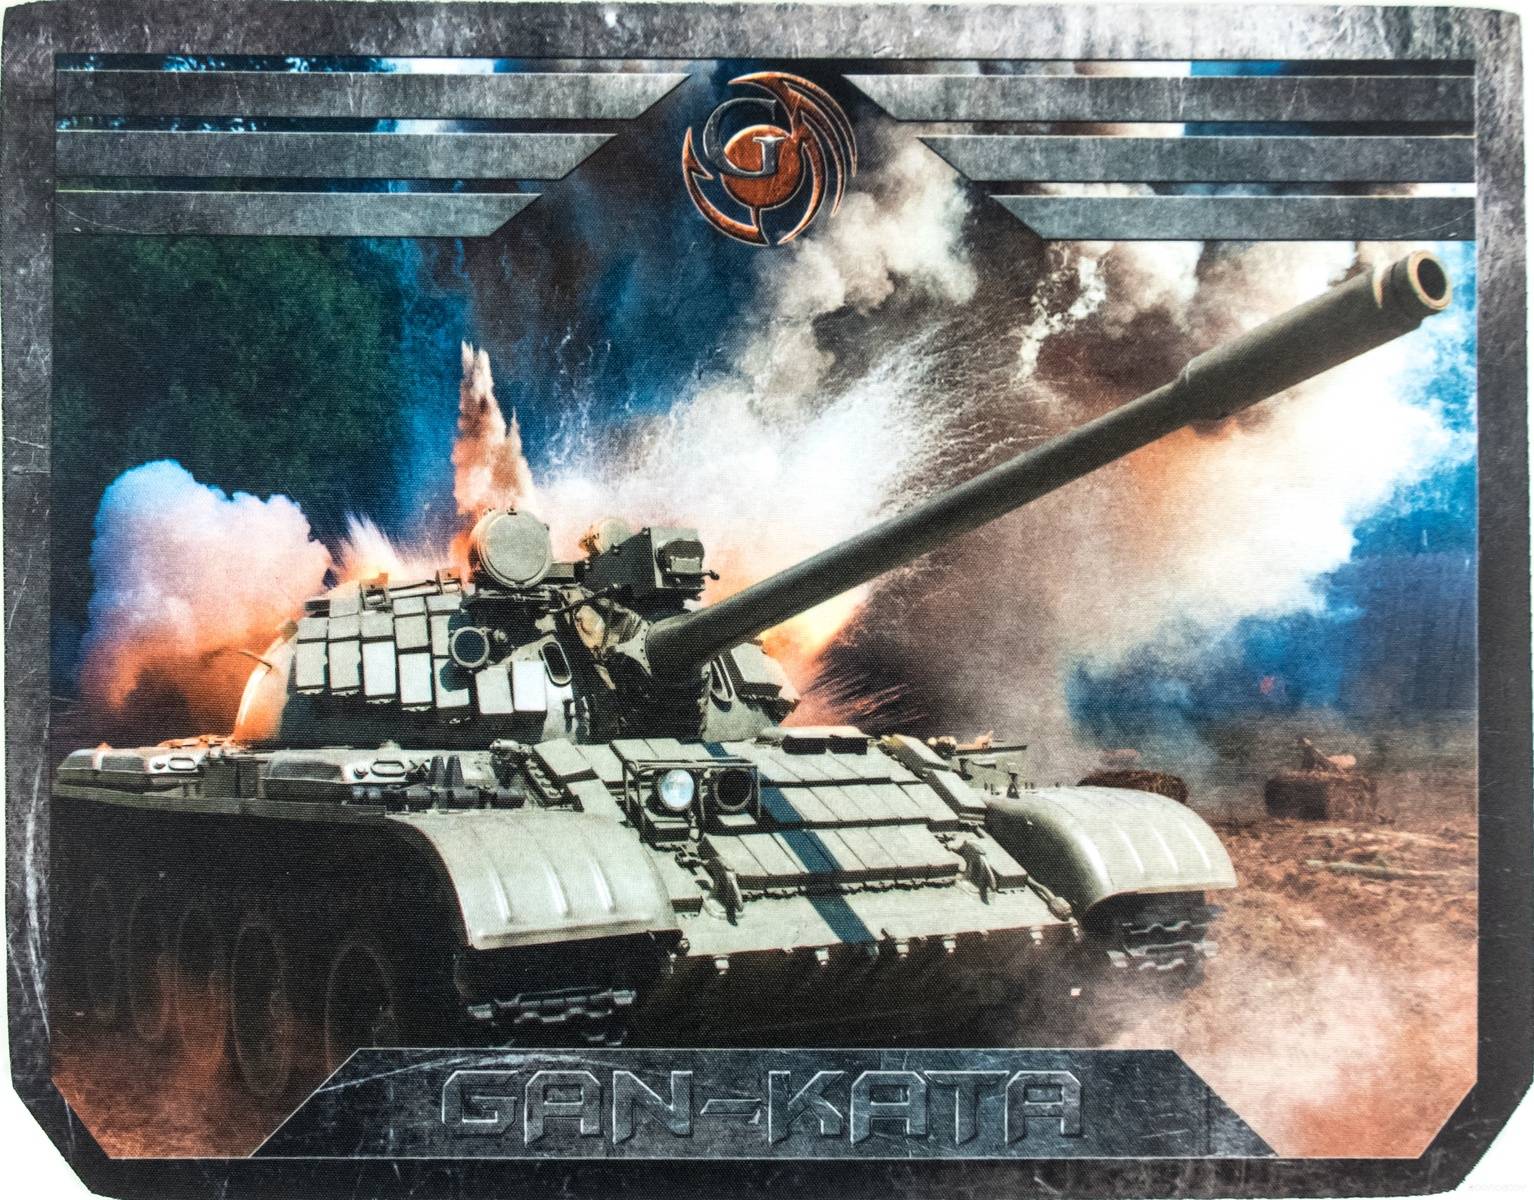    PGK-07 Tank     